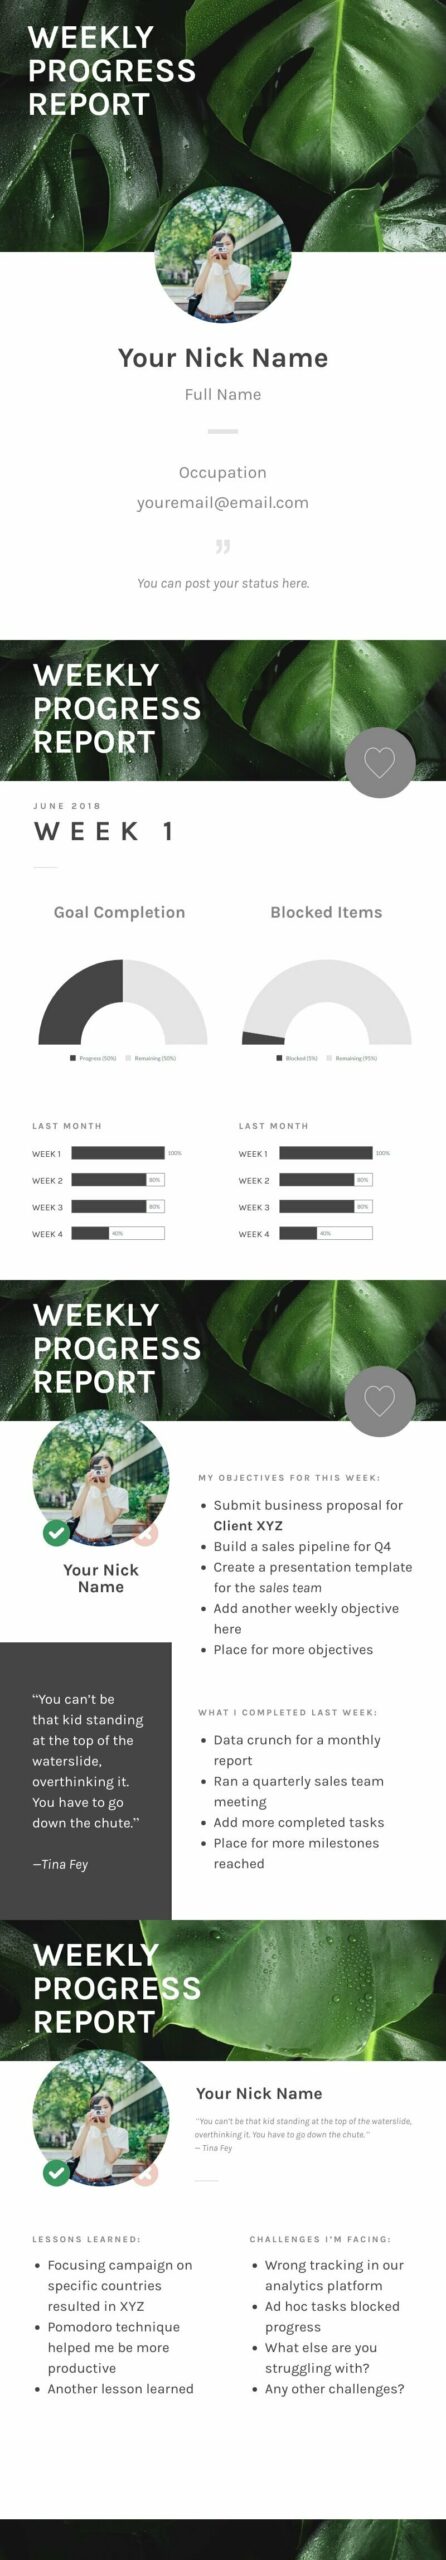 Weekly Progress Report Template